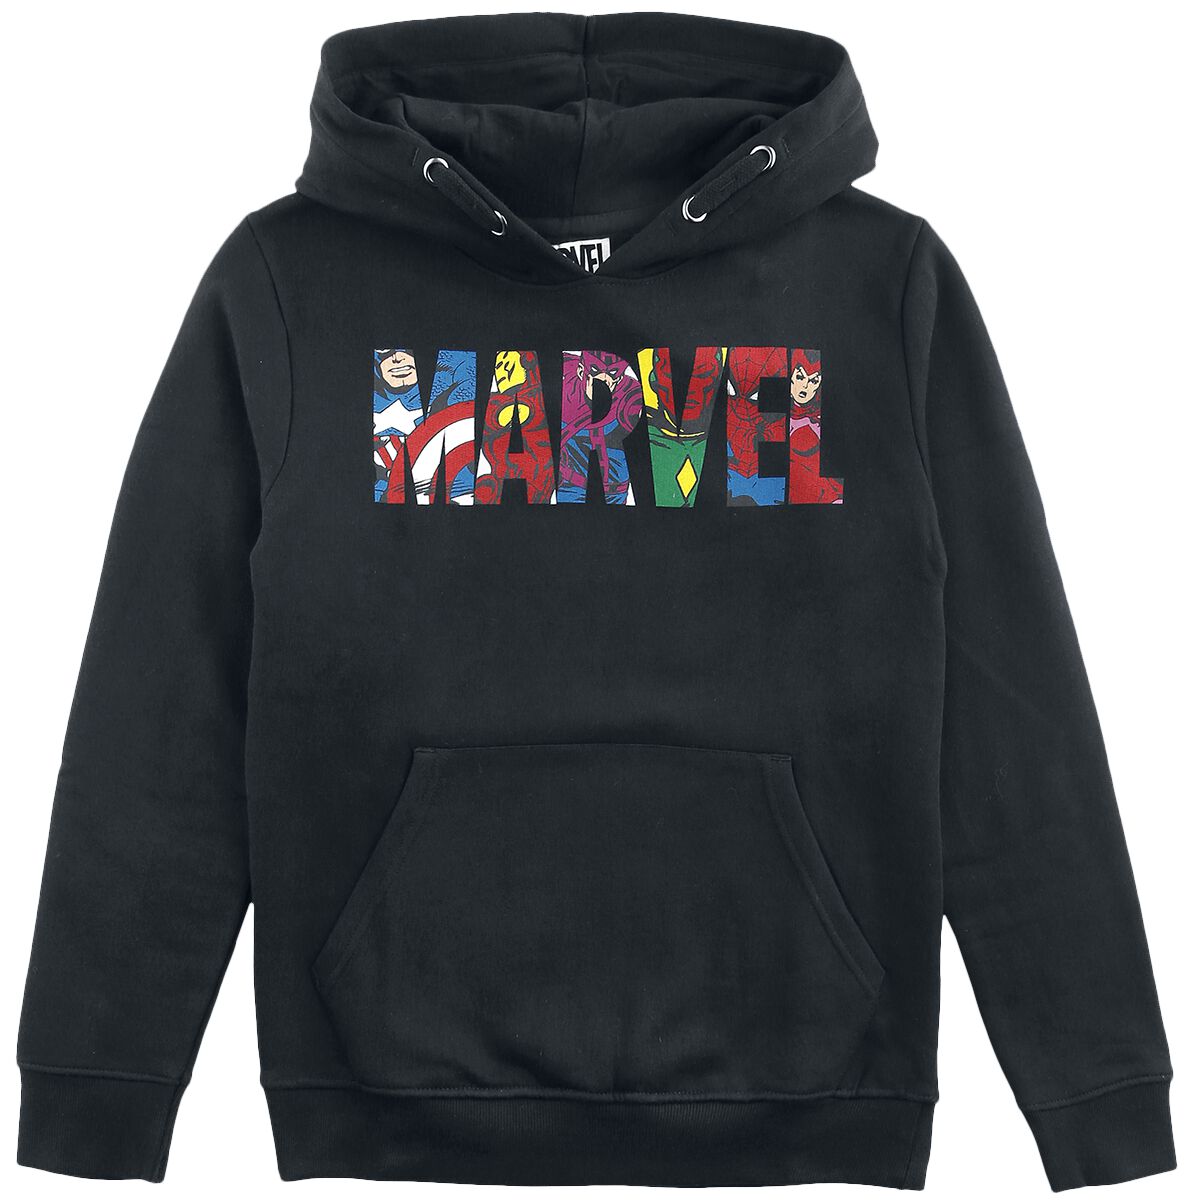 Marvel Kids - Comic logo Hoodie Sweater black